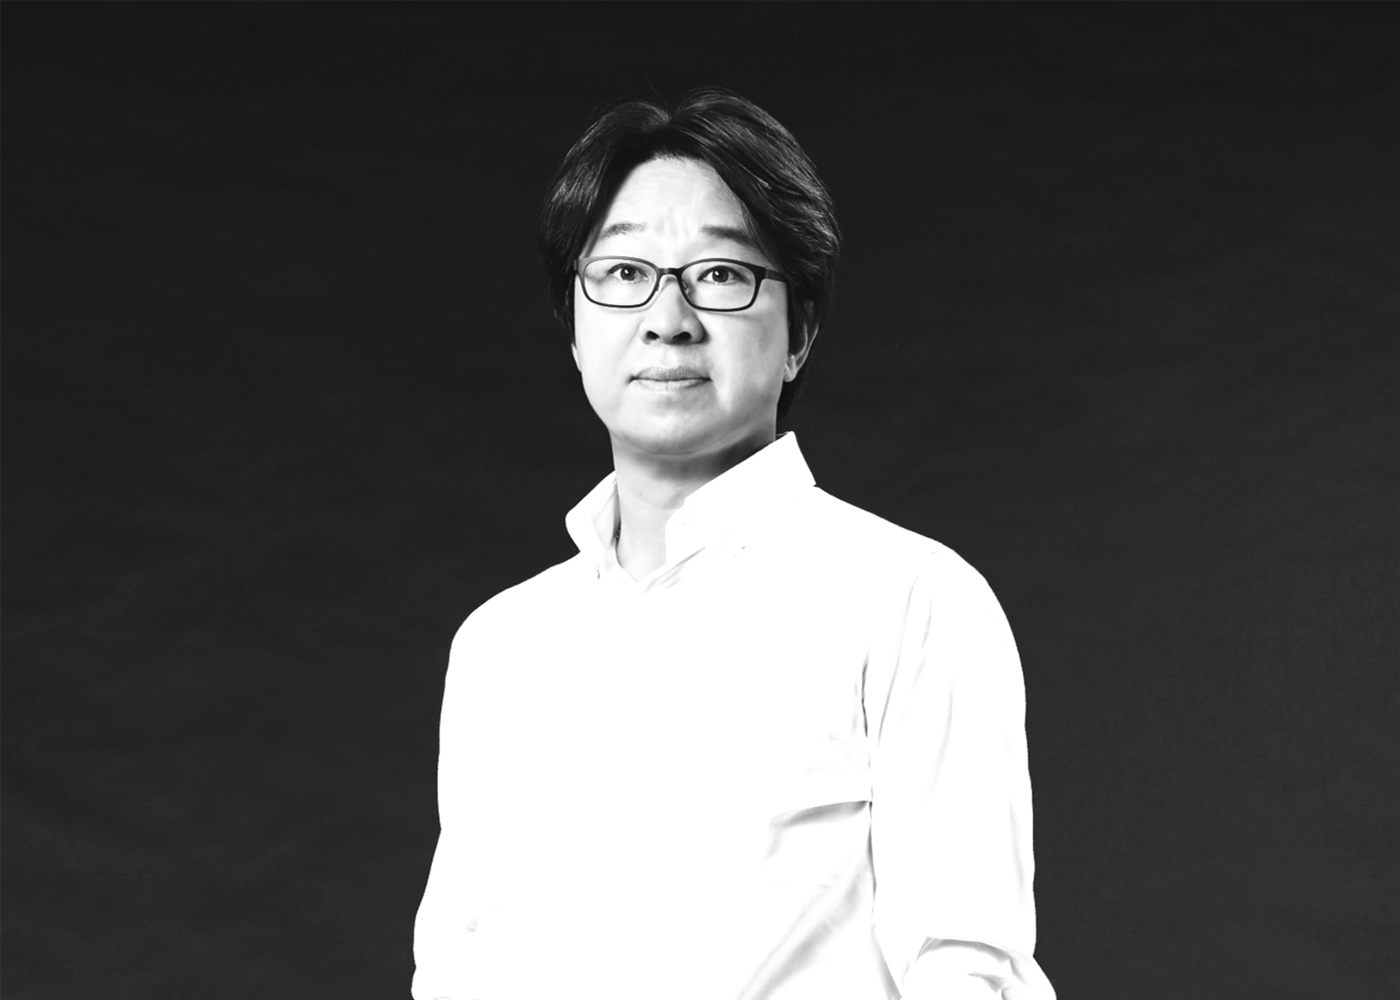 Seunghun Lee